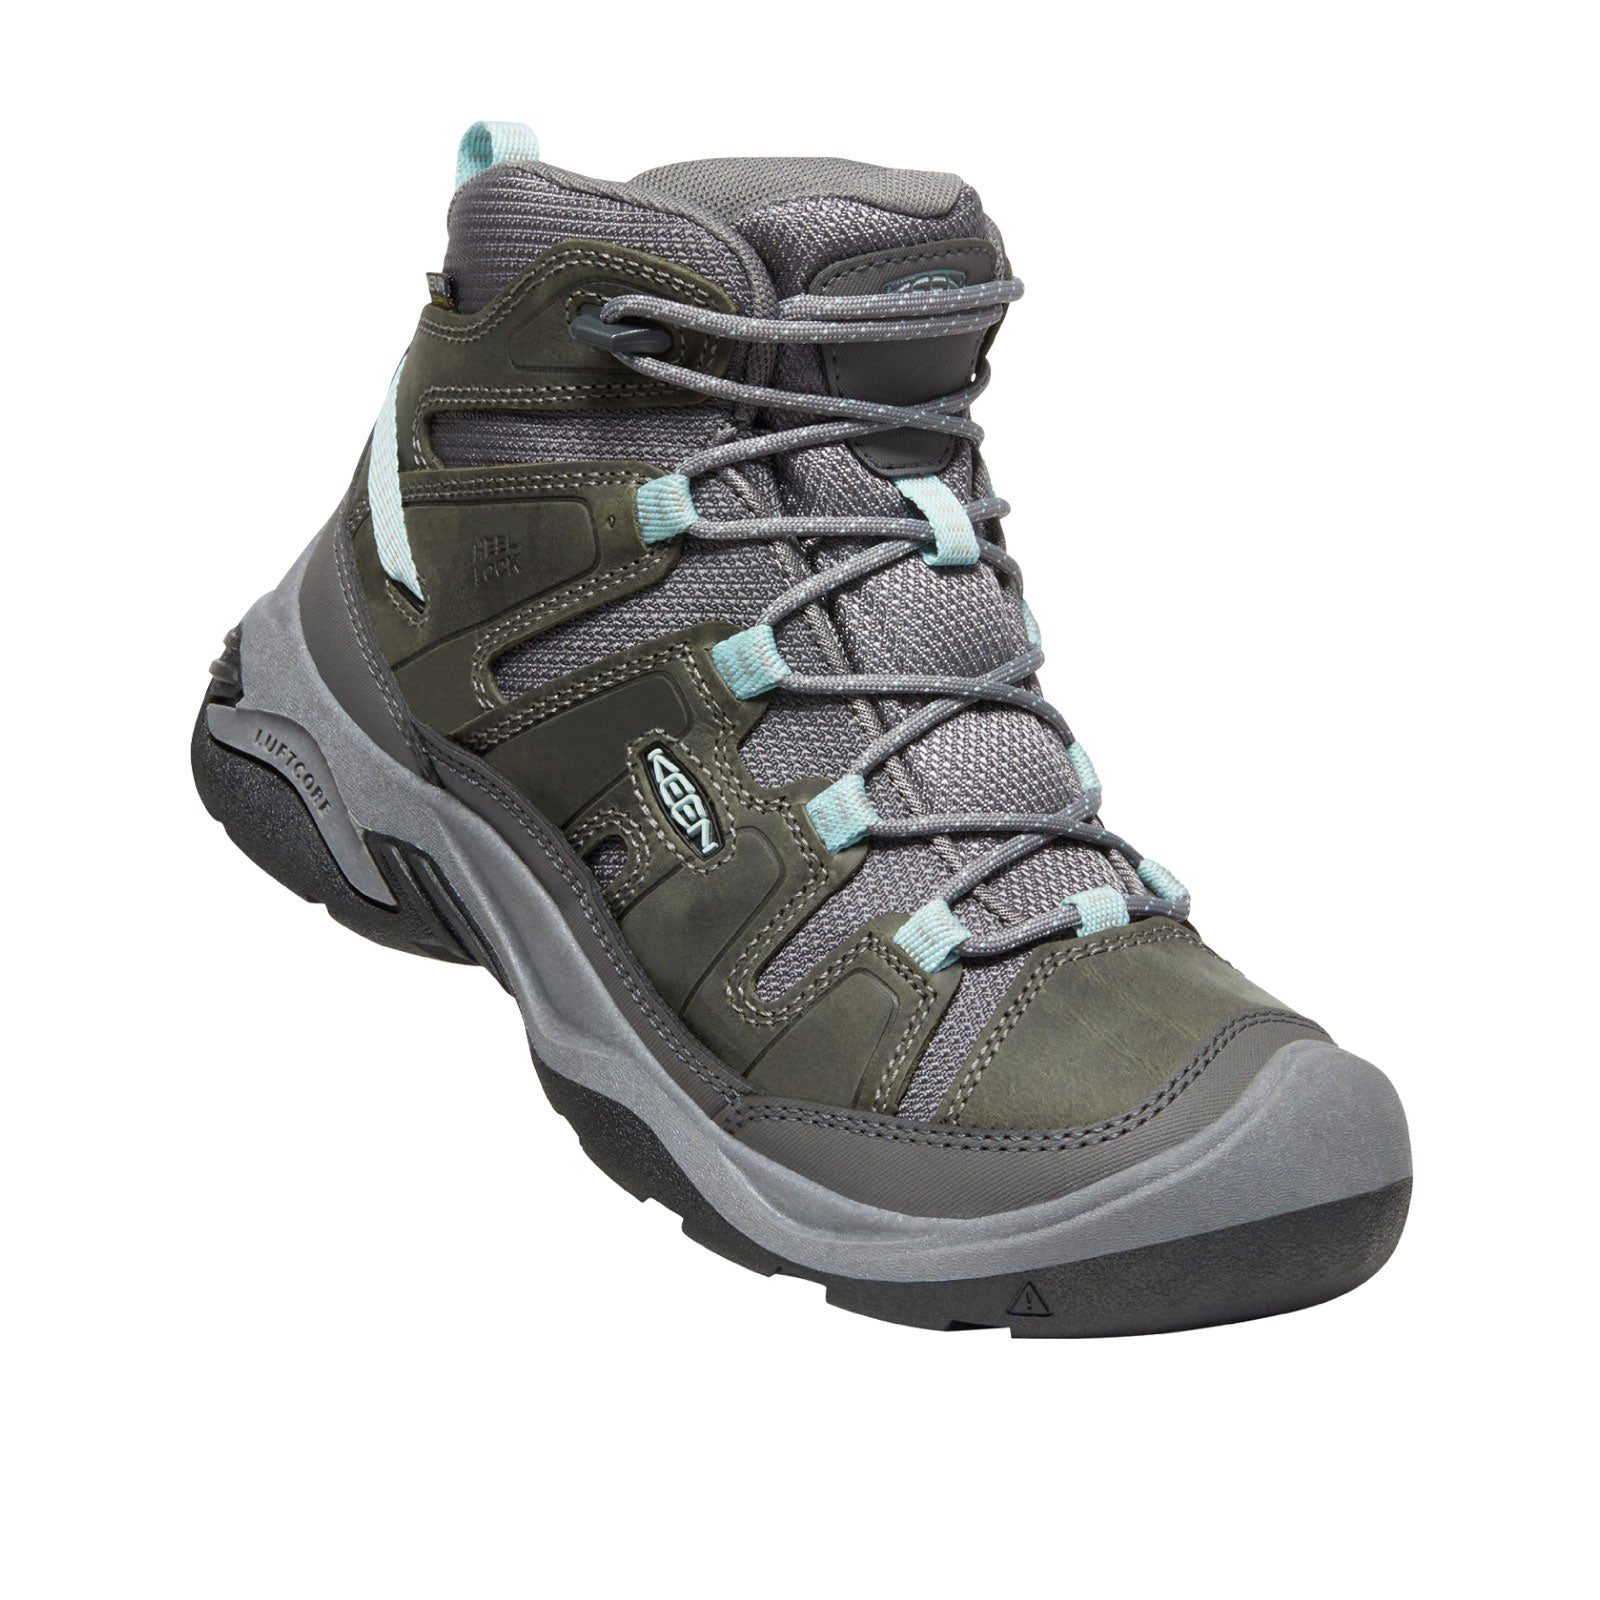 Keen Circadia Mid Waterproof Hiking Boot (Men) - Bison/Brindle